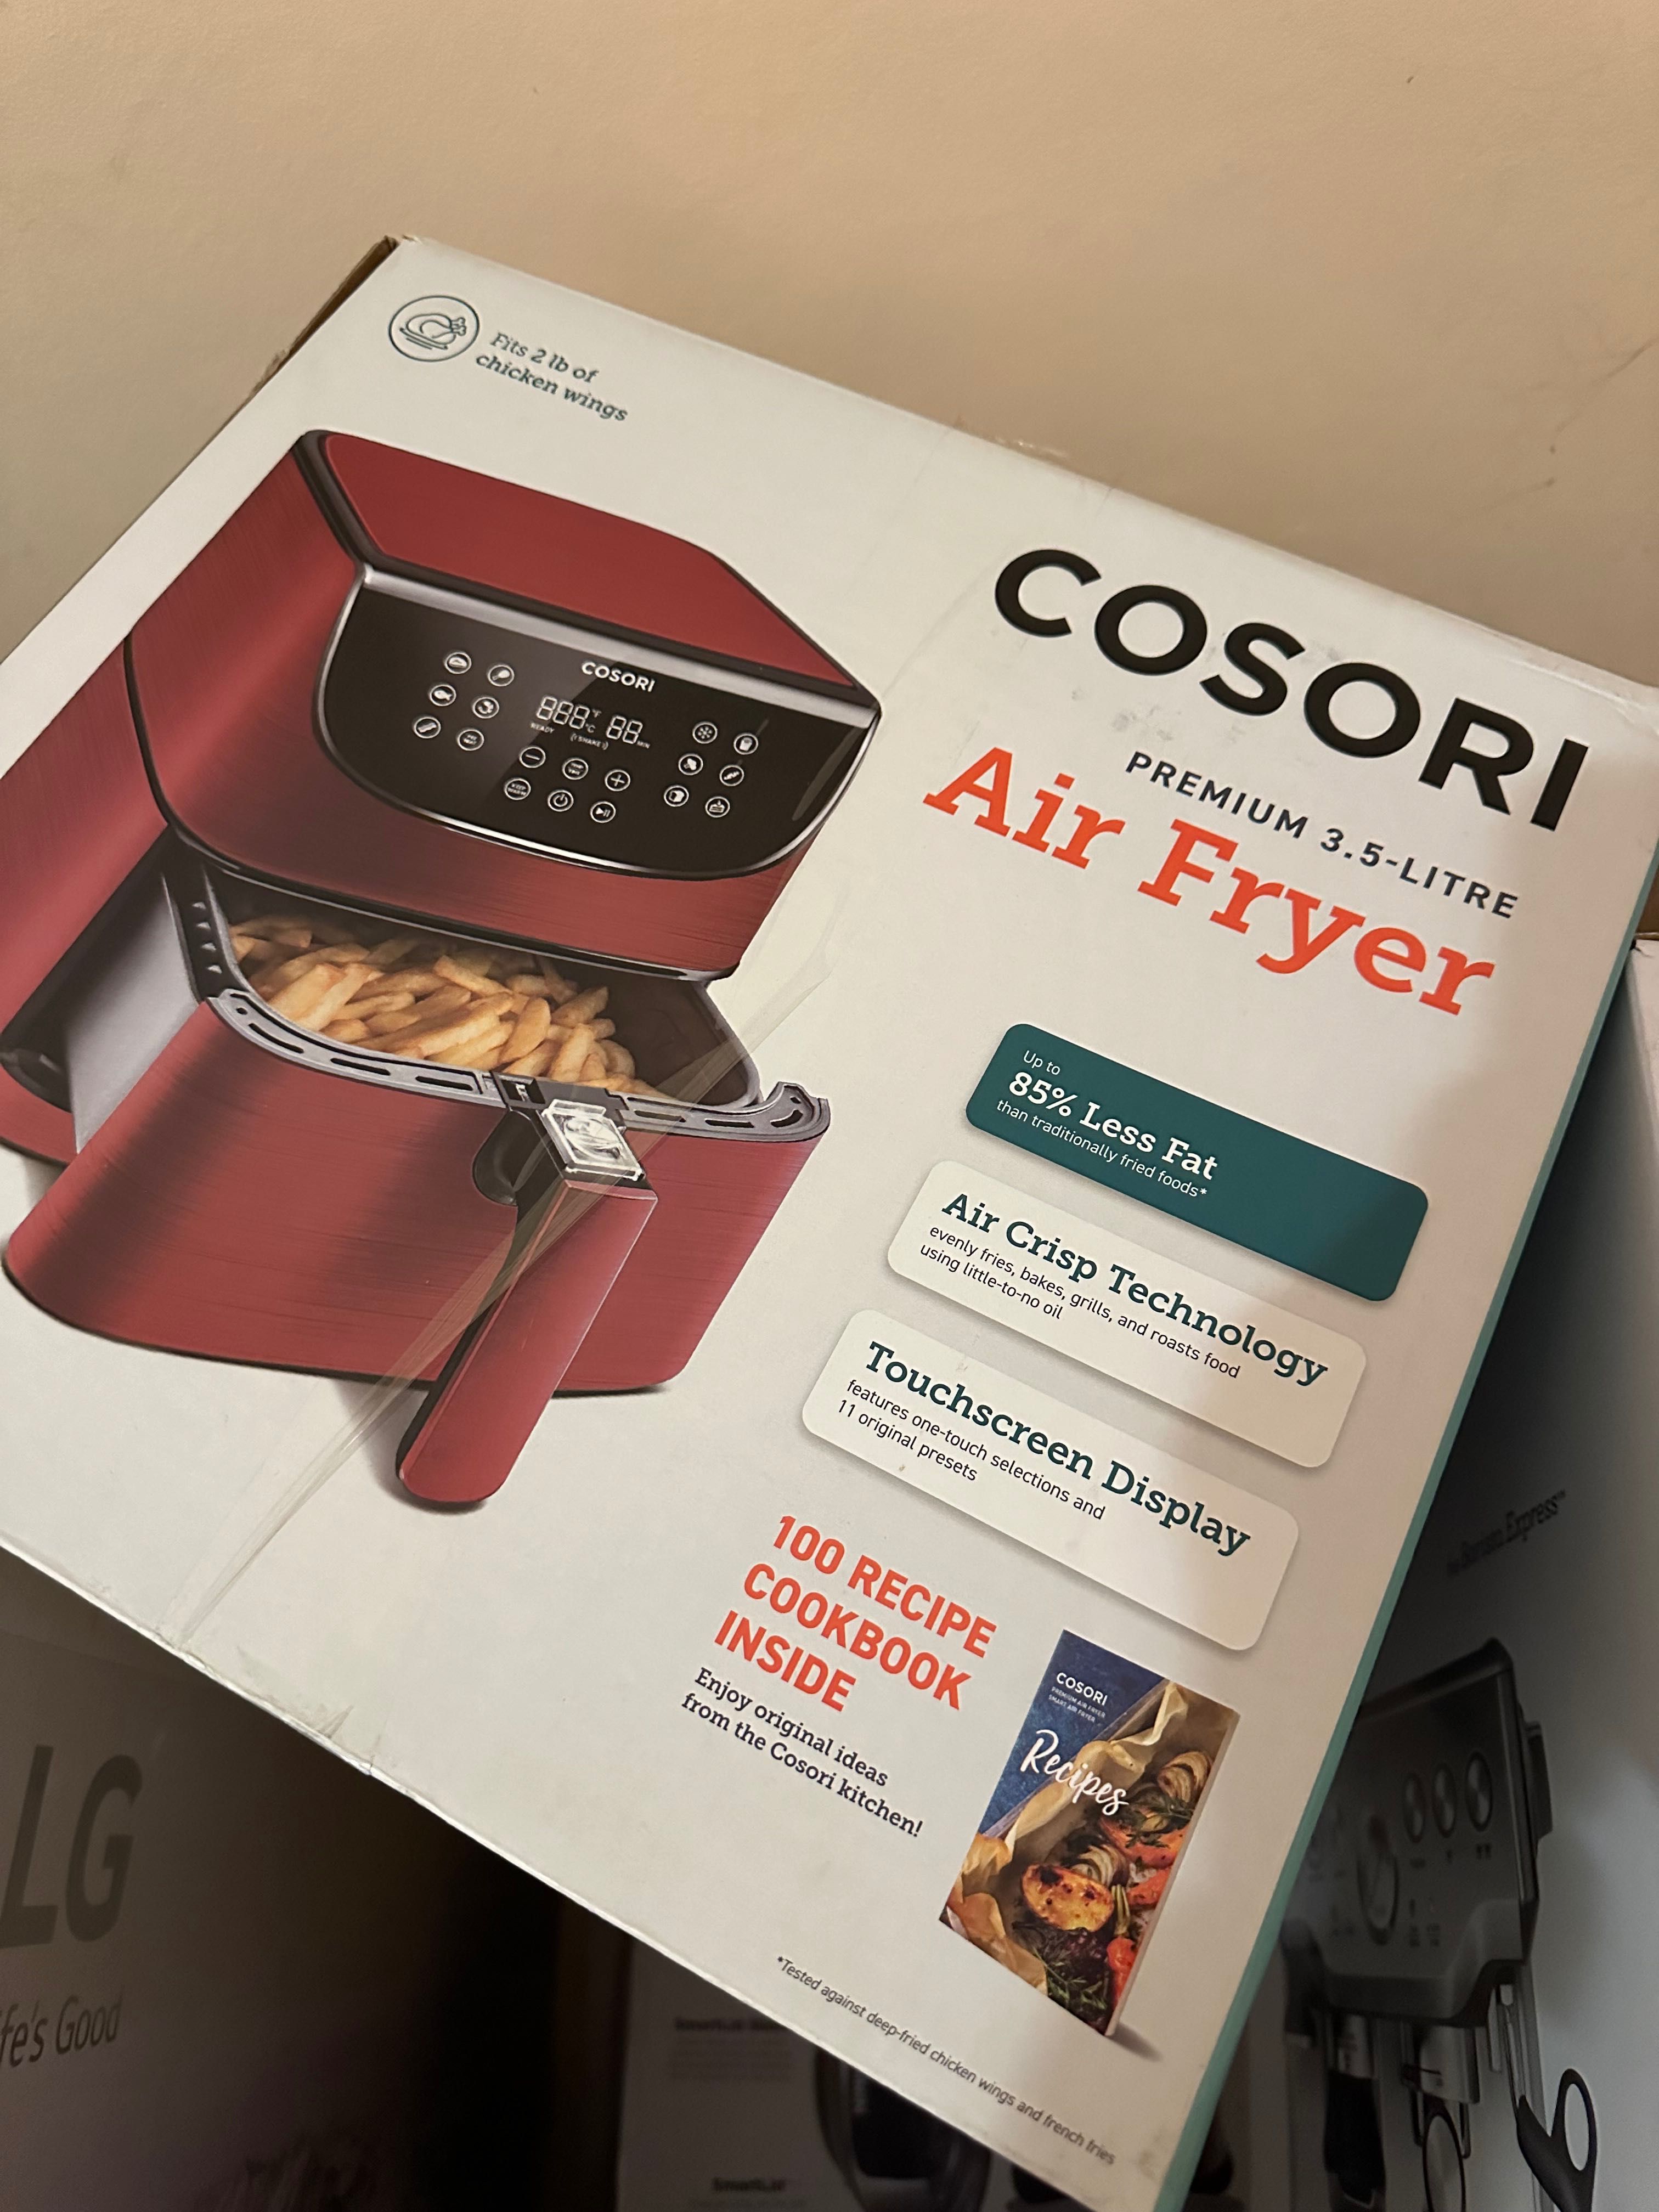 Cosori Air Fryer Premium 3.5ltr